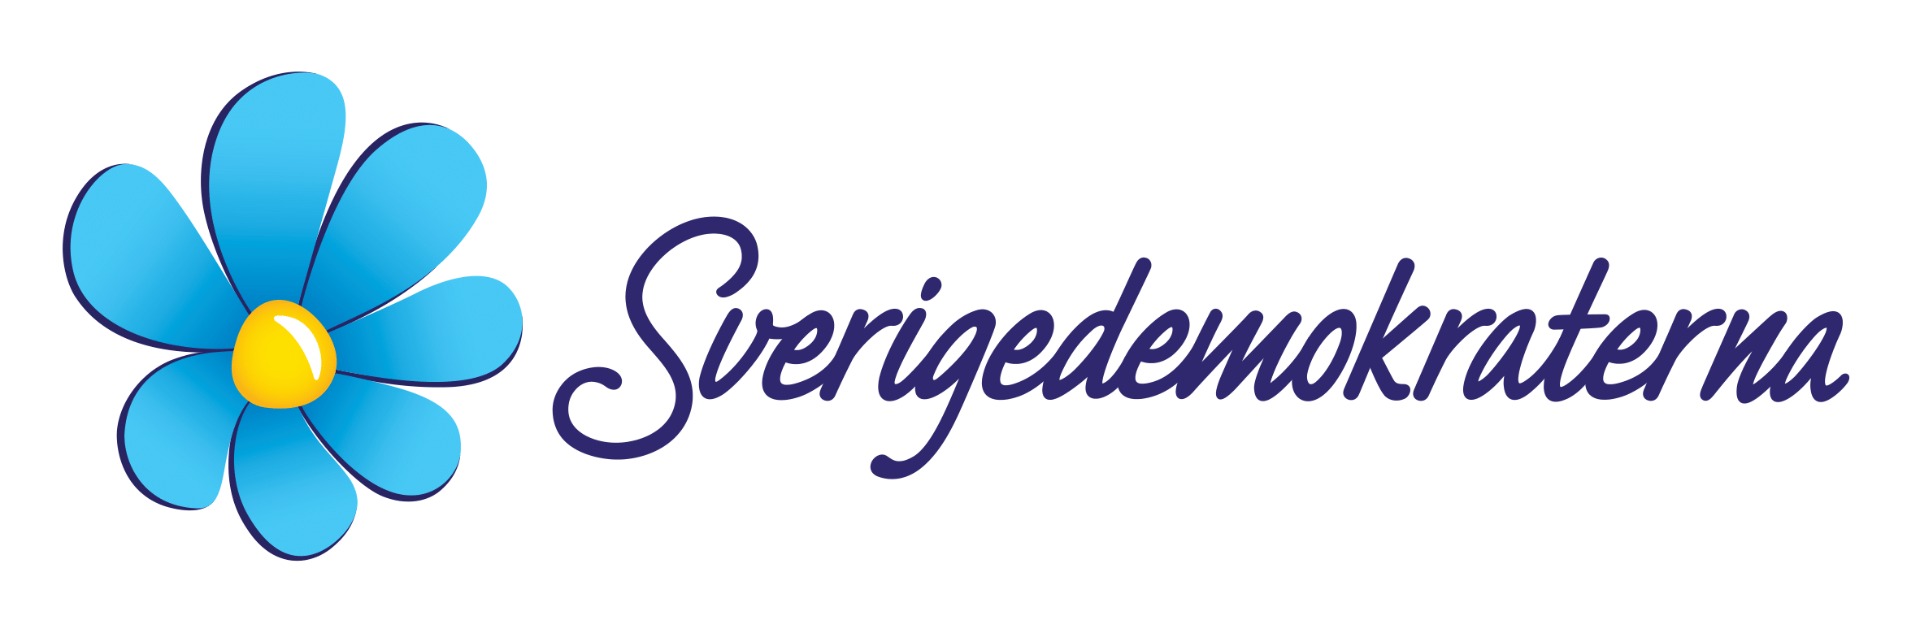 logo_sverigedemokraterna__1__1